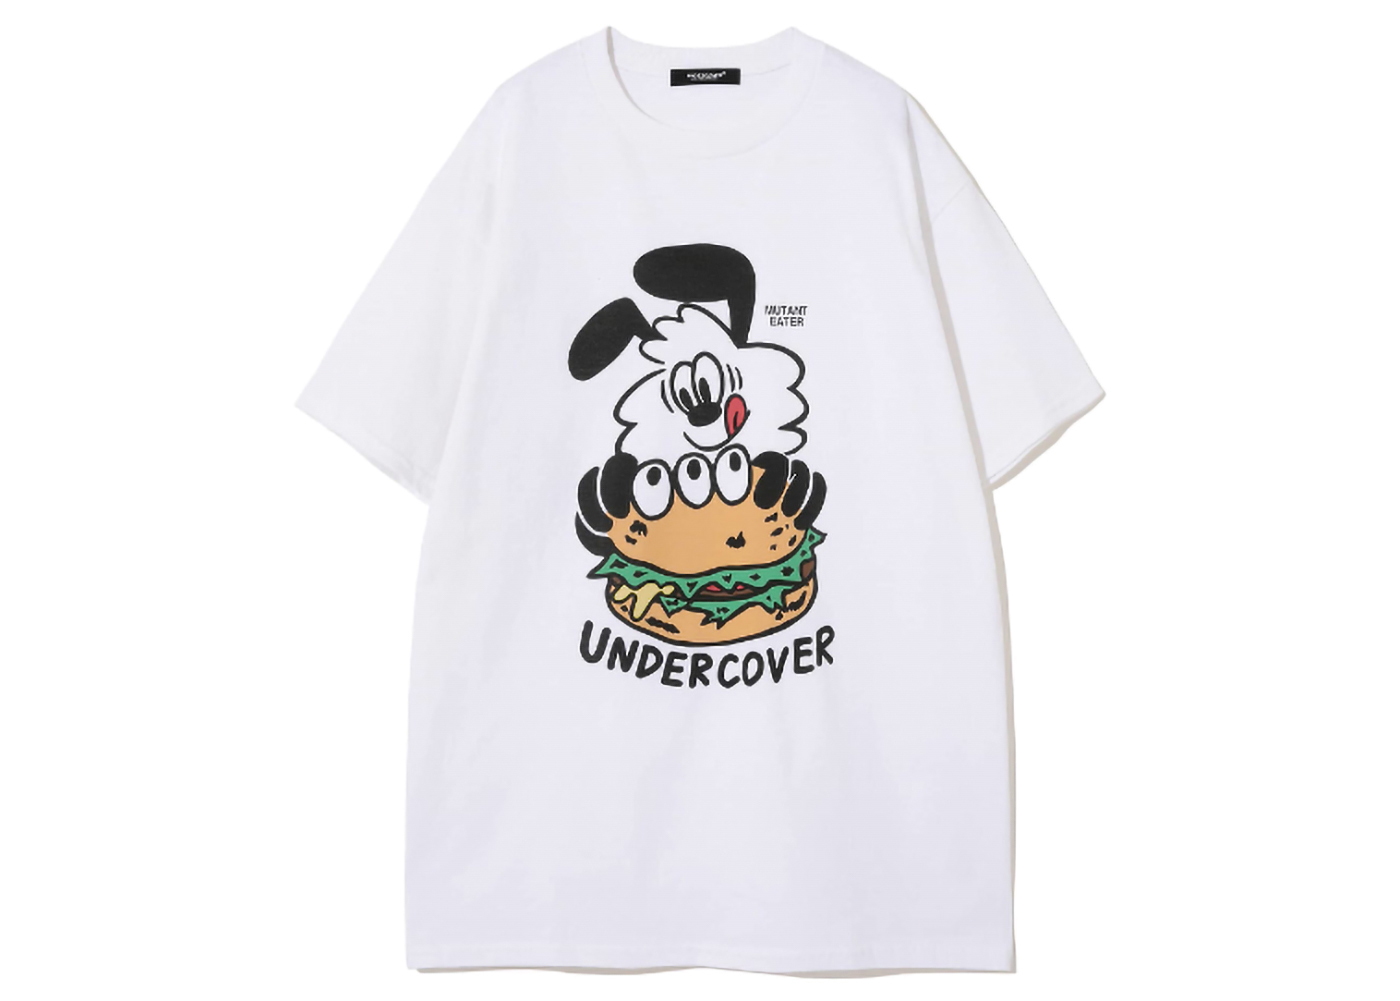 Undercover x Verdy Mutant Eater T-Shirt White